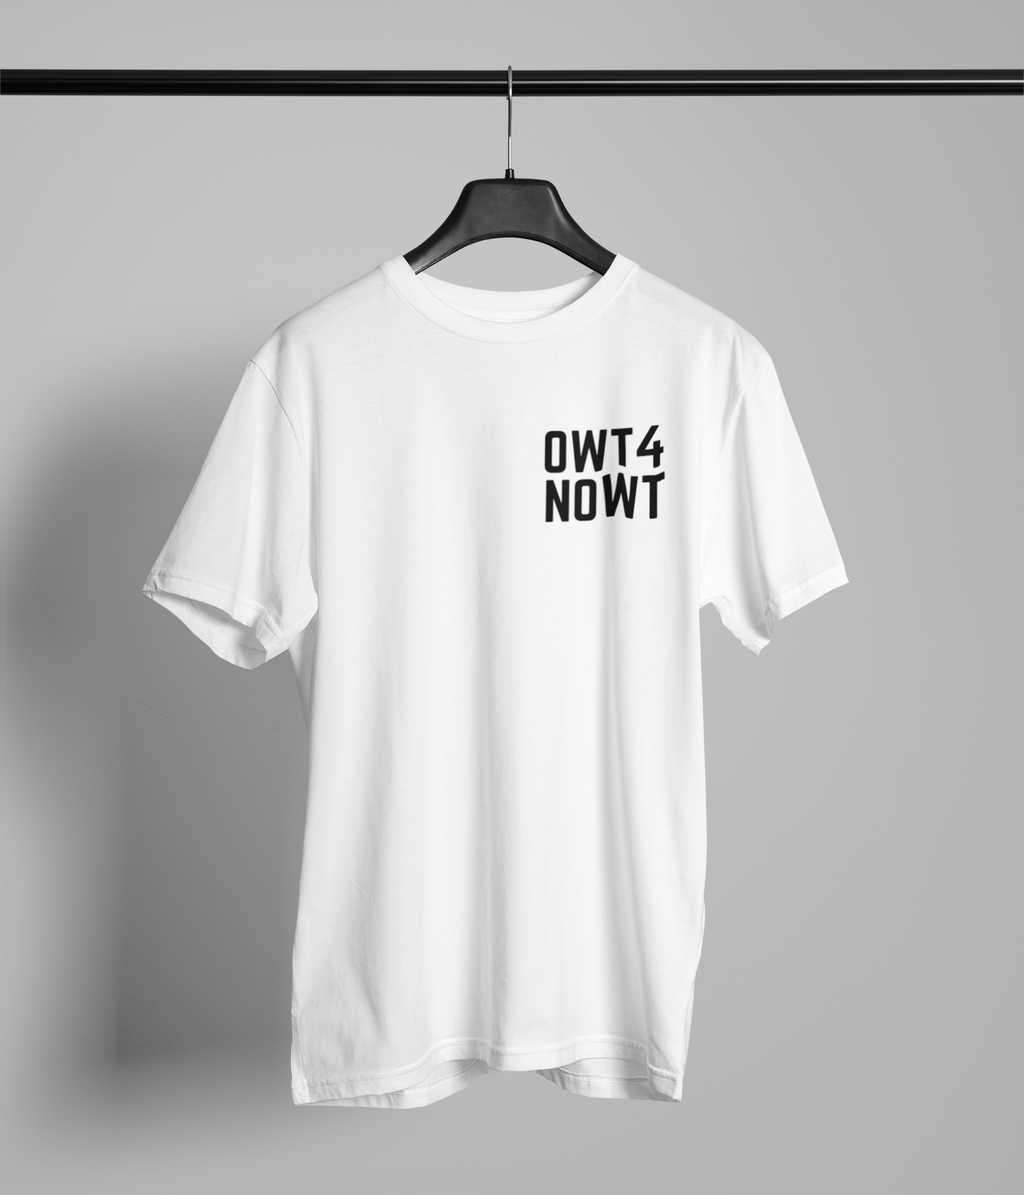 OWT4NOWT Northern Slang T-Shirt Unisex